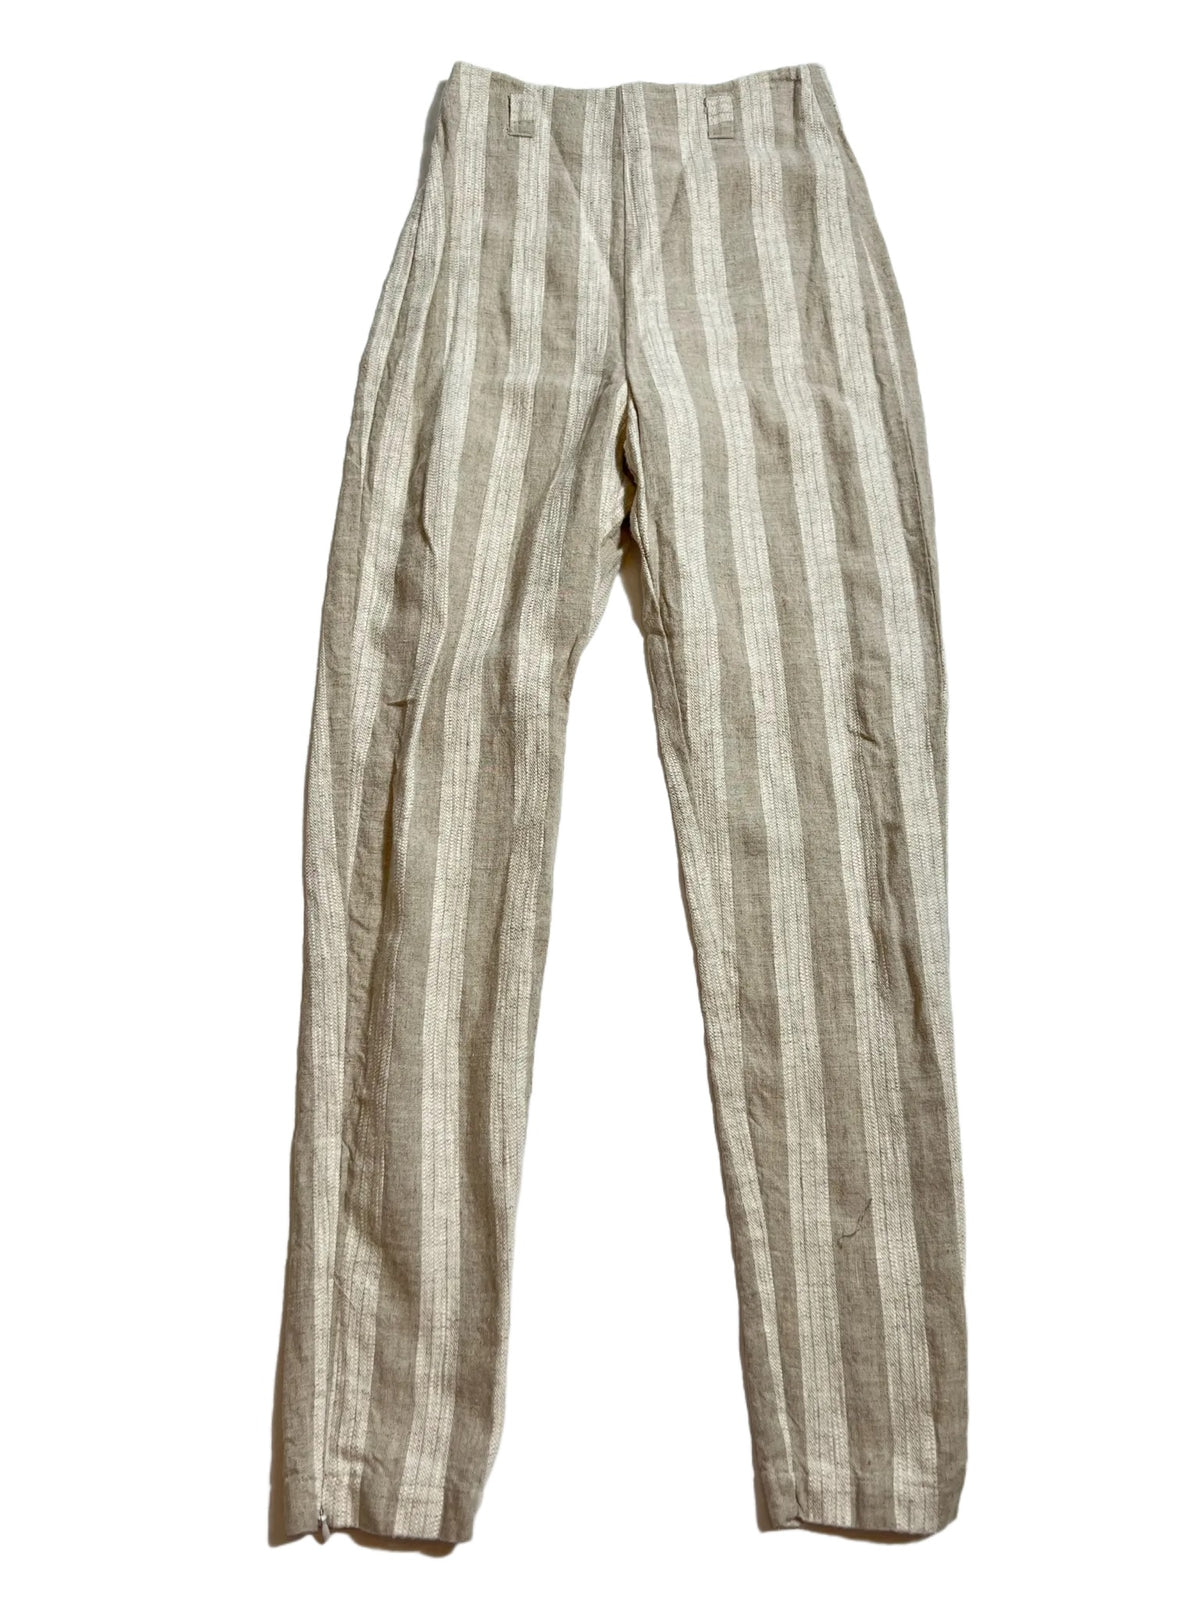 Reformation- Tan Striped Pants